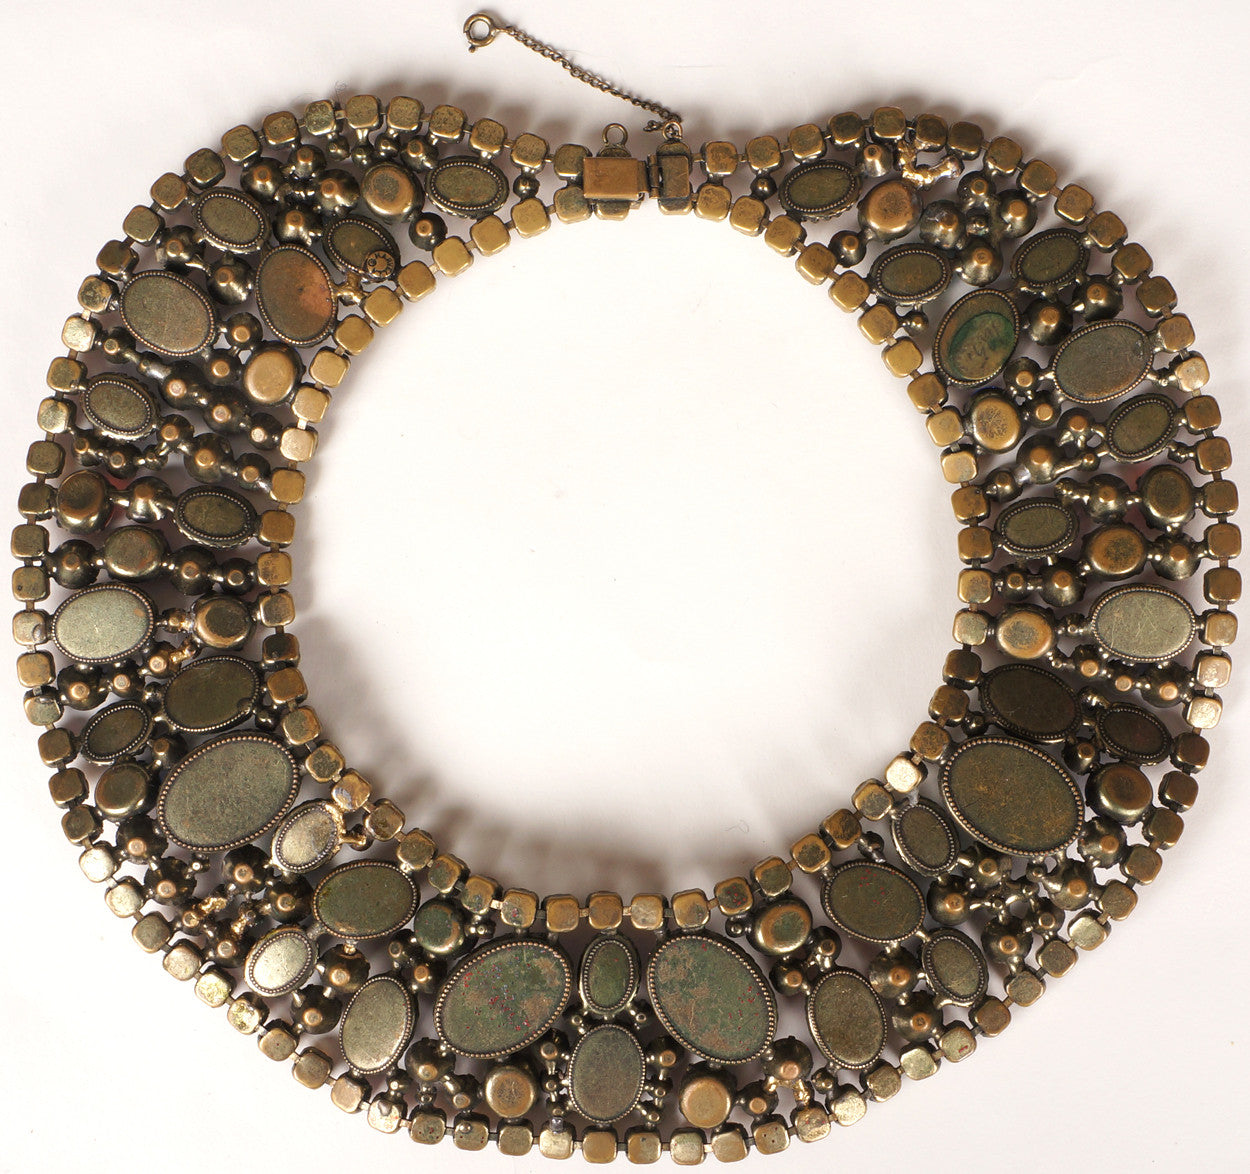 Vintage 1950s Rhinestone Collar Bib Necklace Signed Marvella